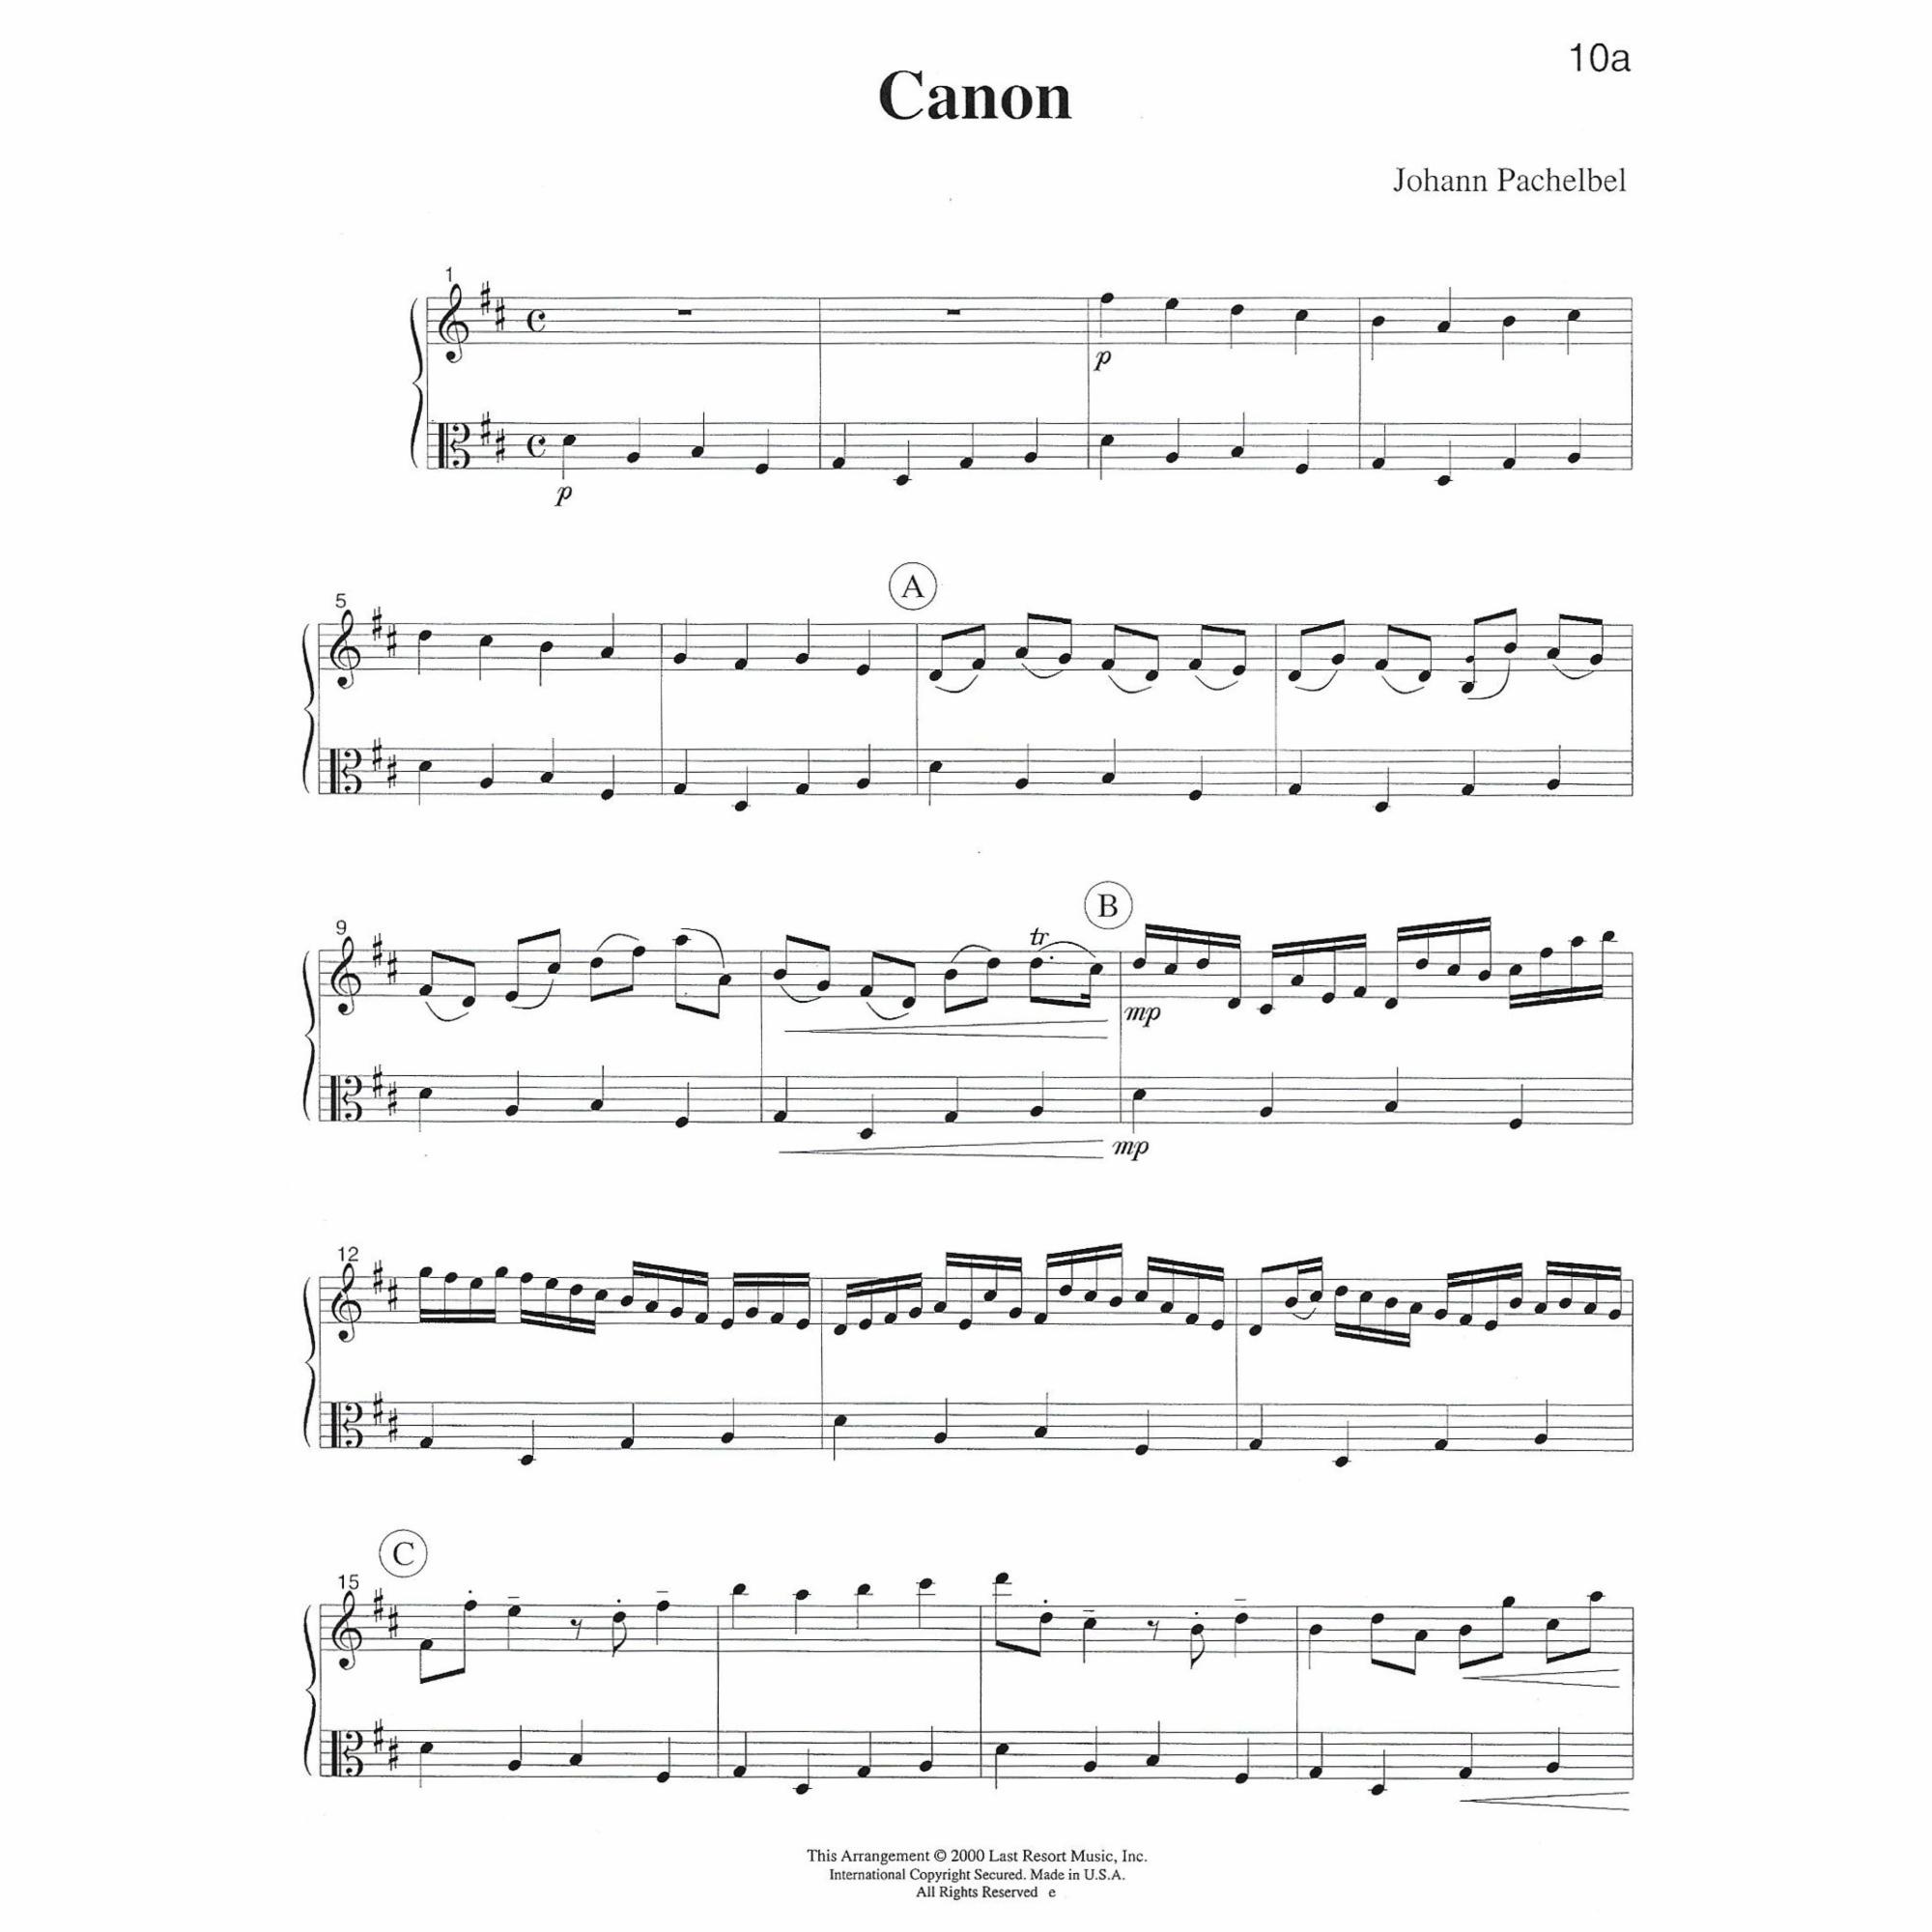 Sample: Violin and Viola (Pg. 10a)